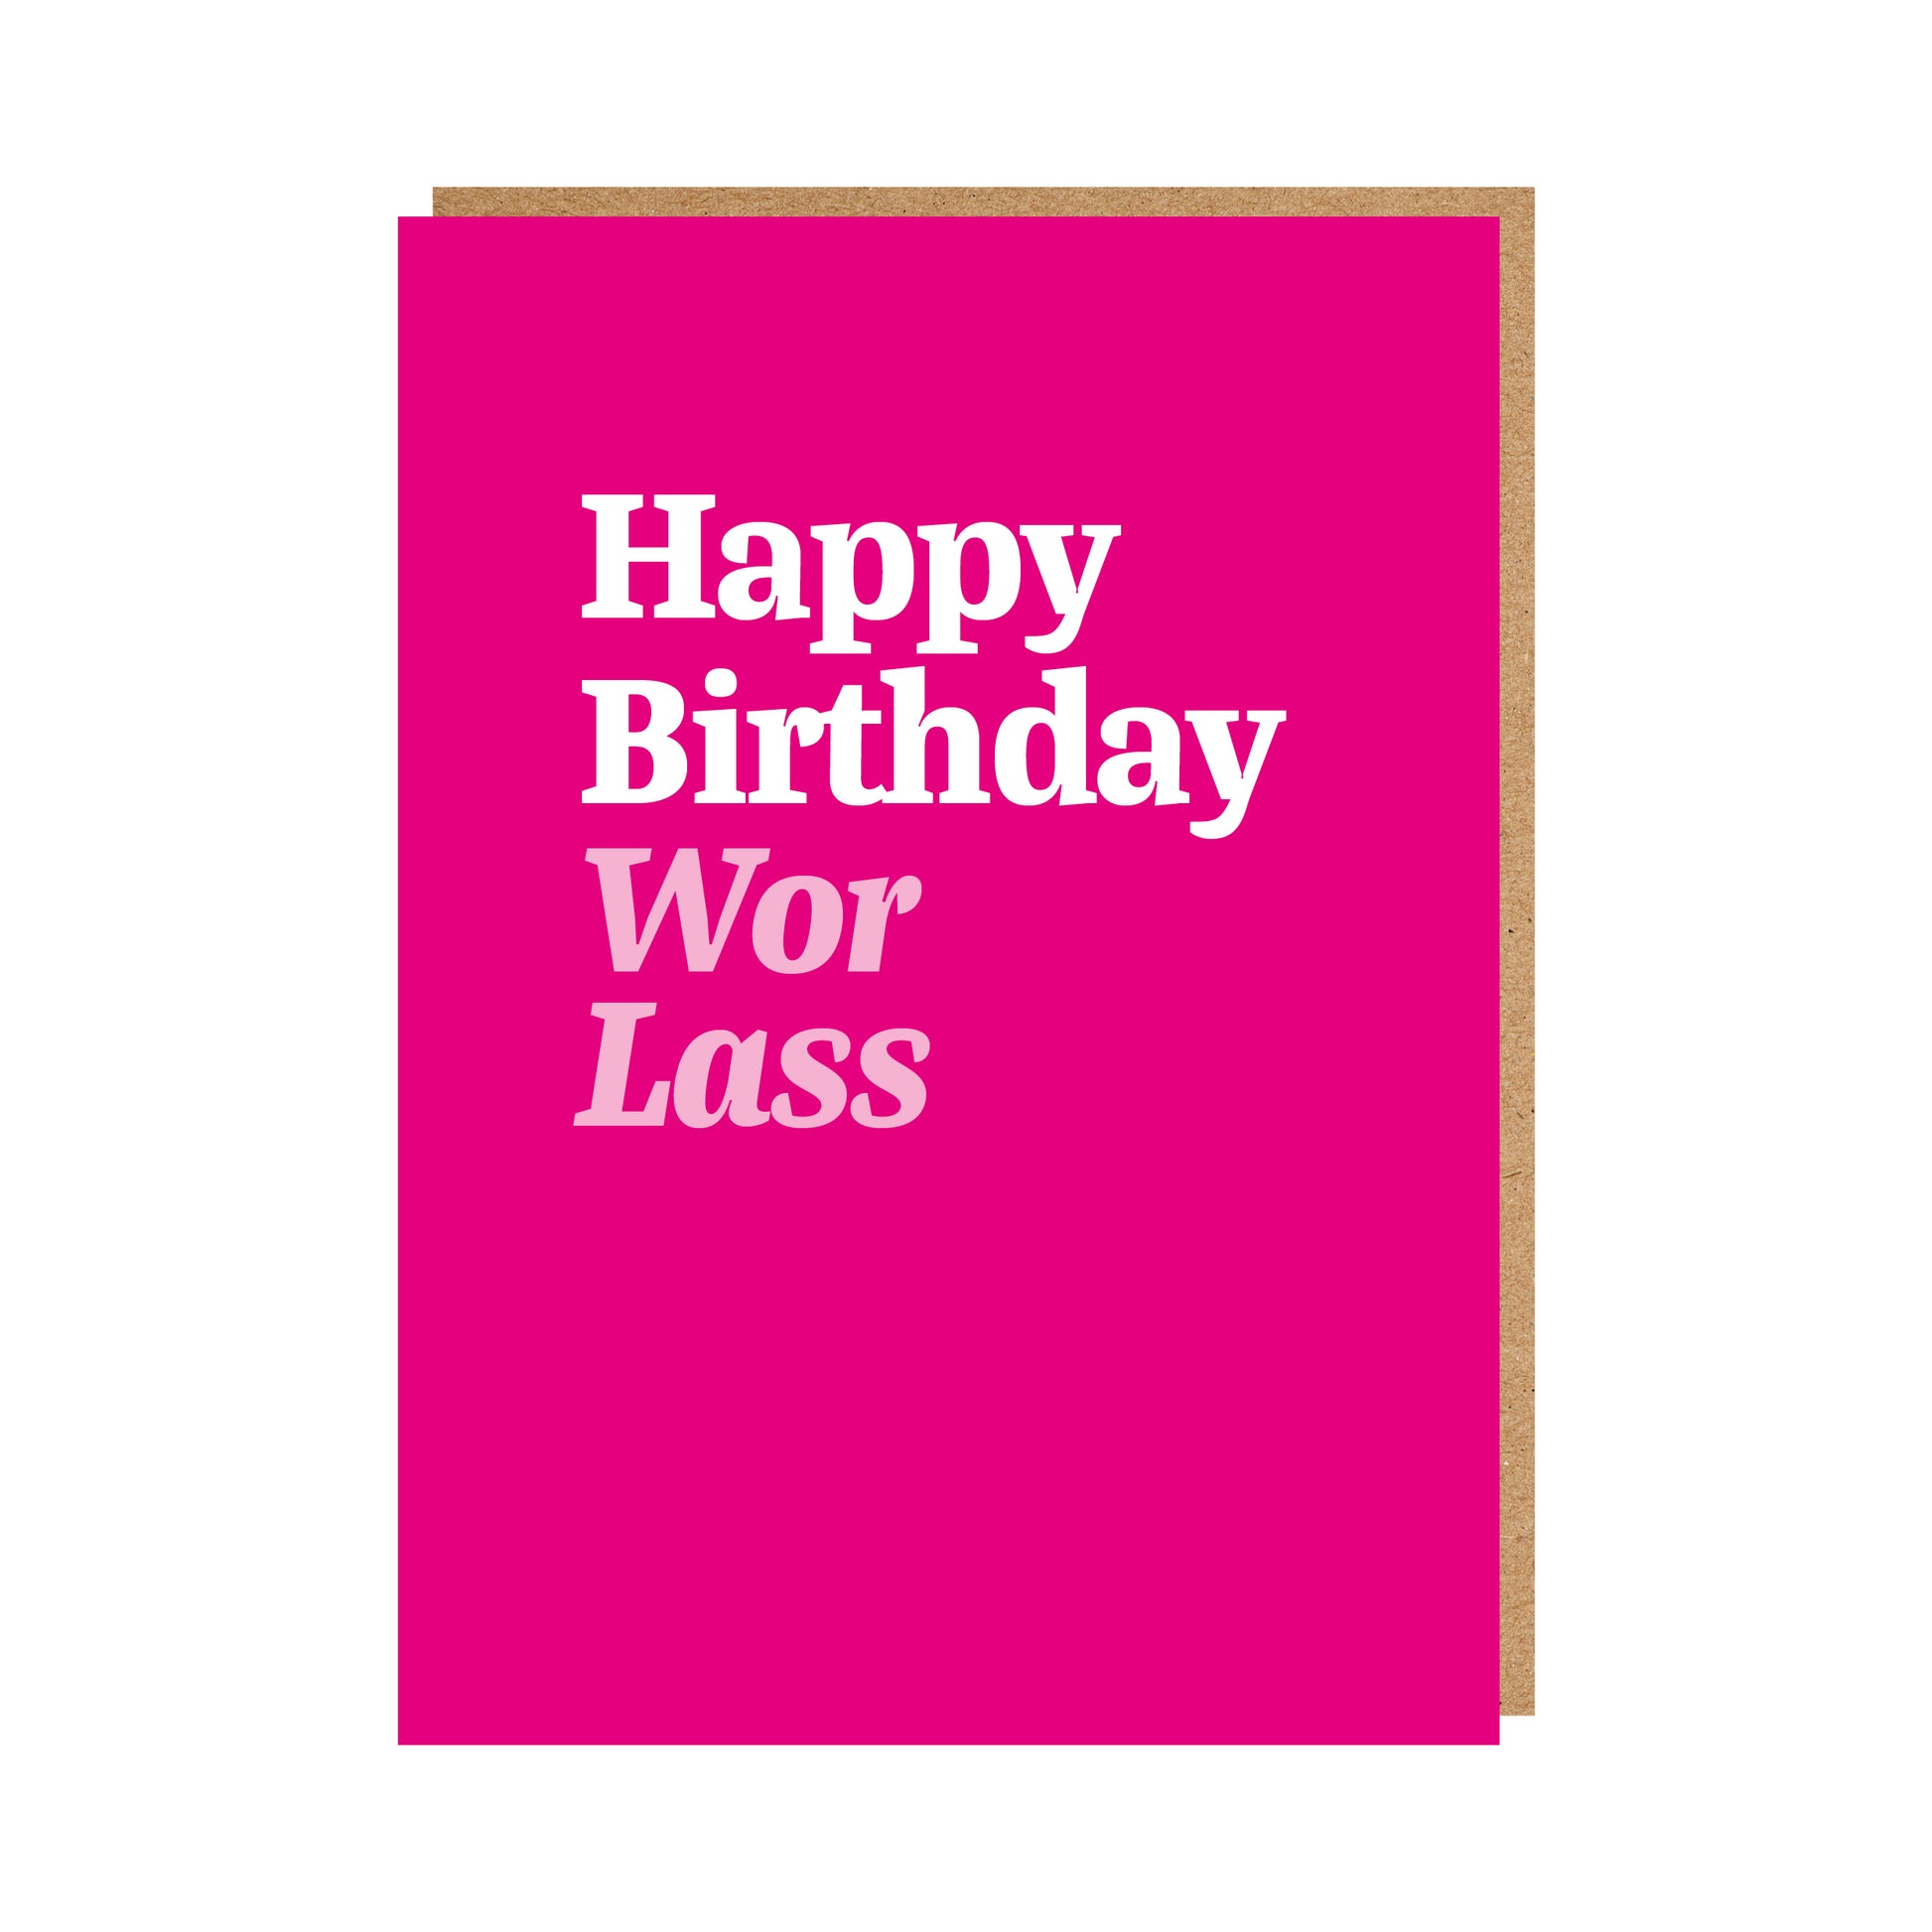 Geordie Girlfriend Birthday Card text reads "Happy Birthday Wor Lass"